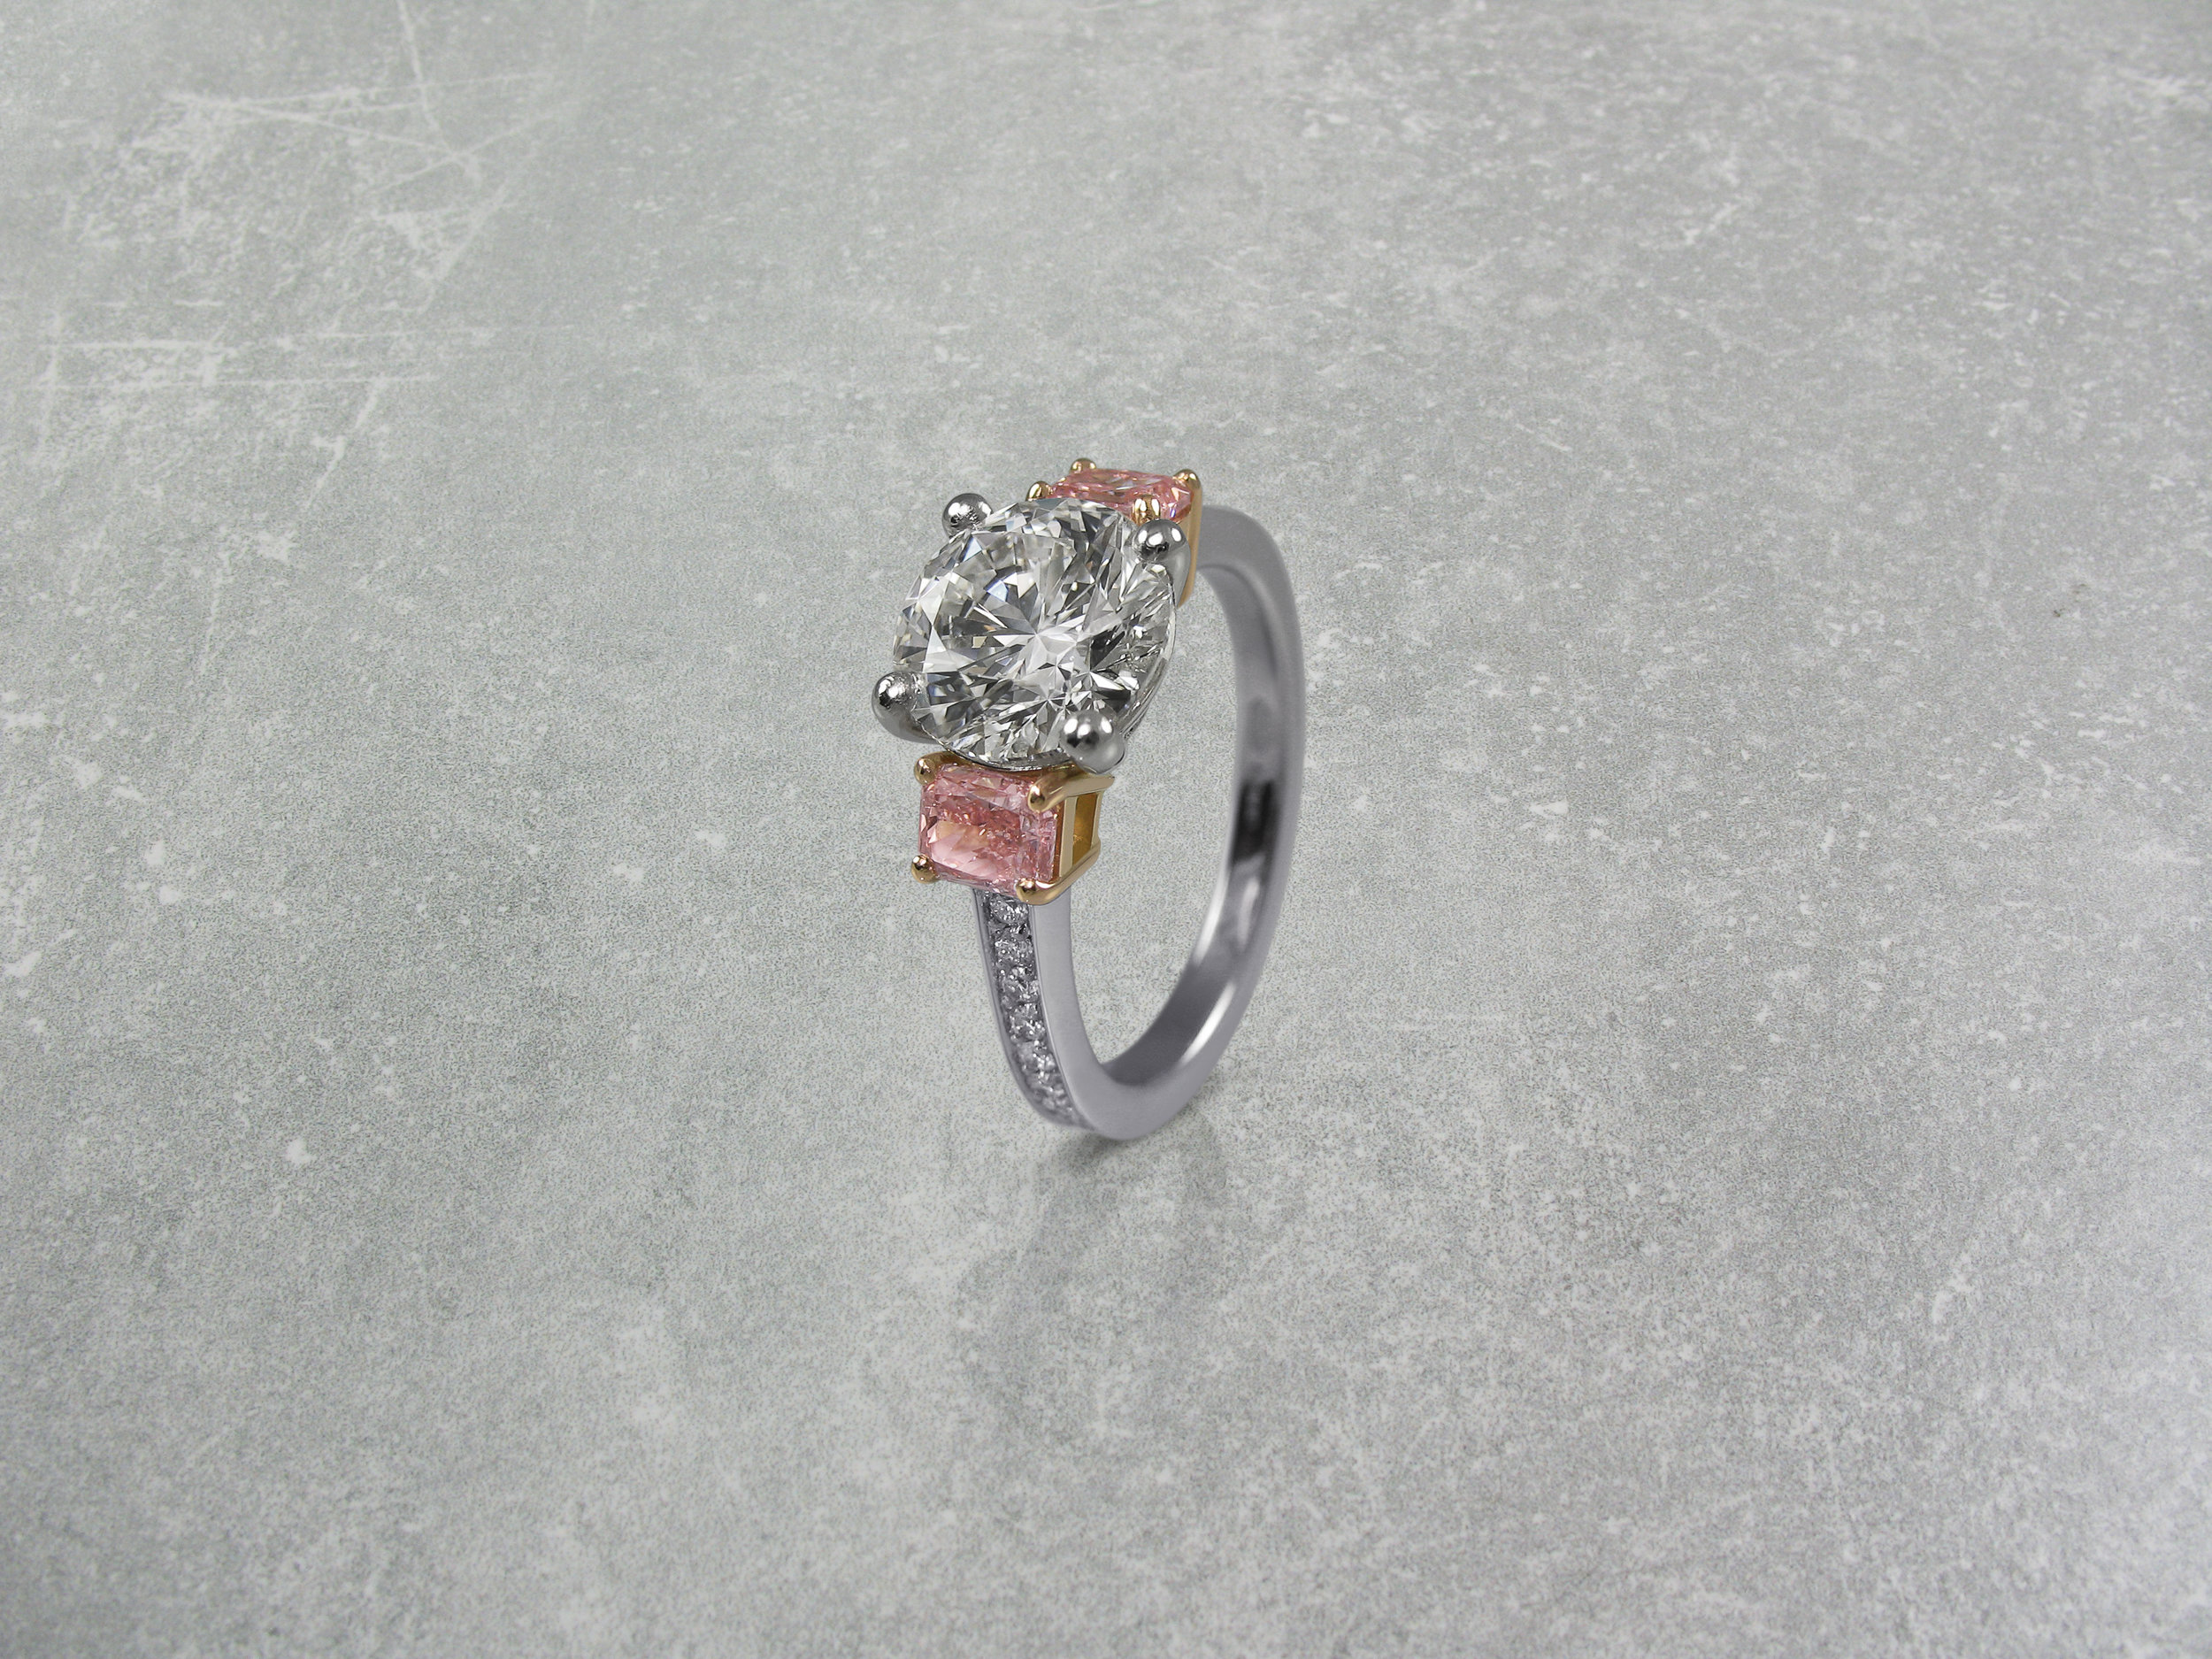 Round brilliant cut diamond and radiant cut pink diamond trilogy engagement ring